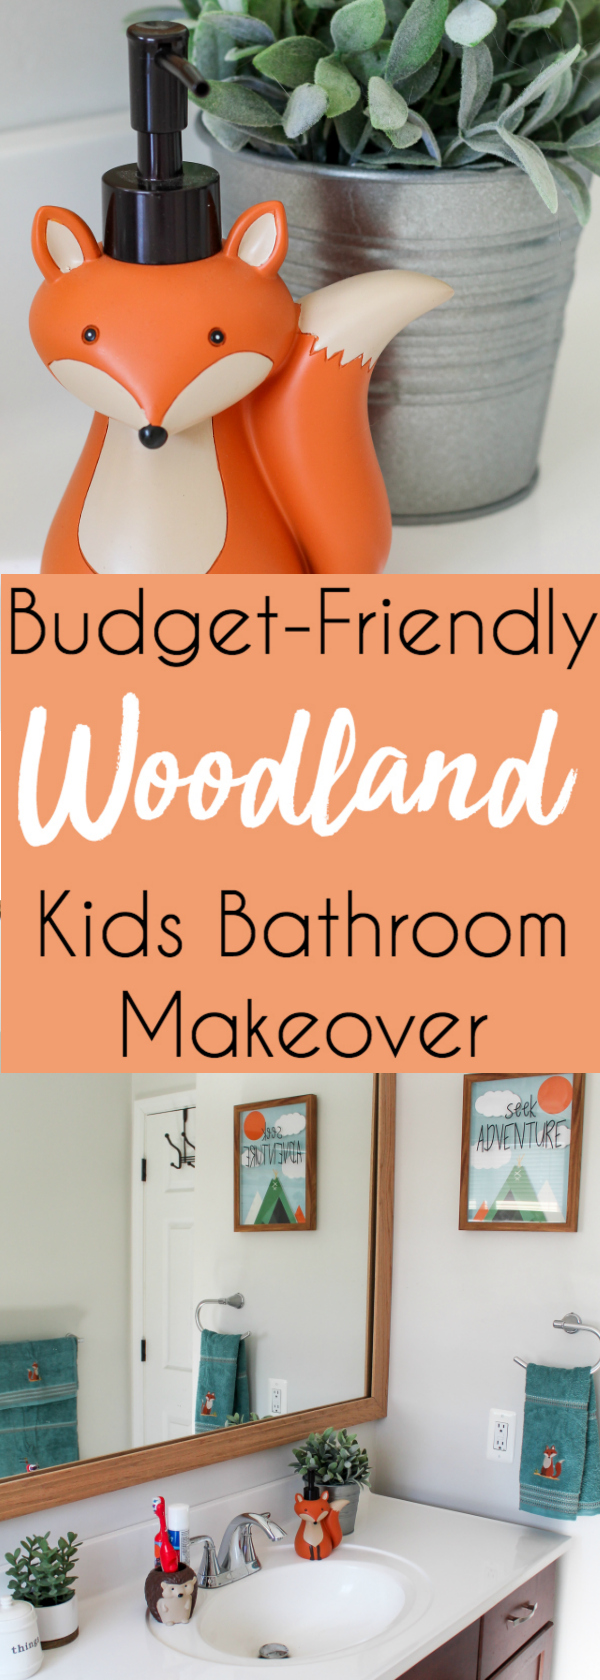 Kids Bath Mat Woodland Animals, Kids Bathroom Decor and Accessories